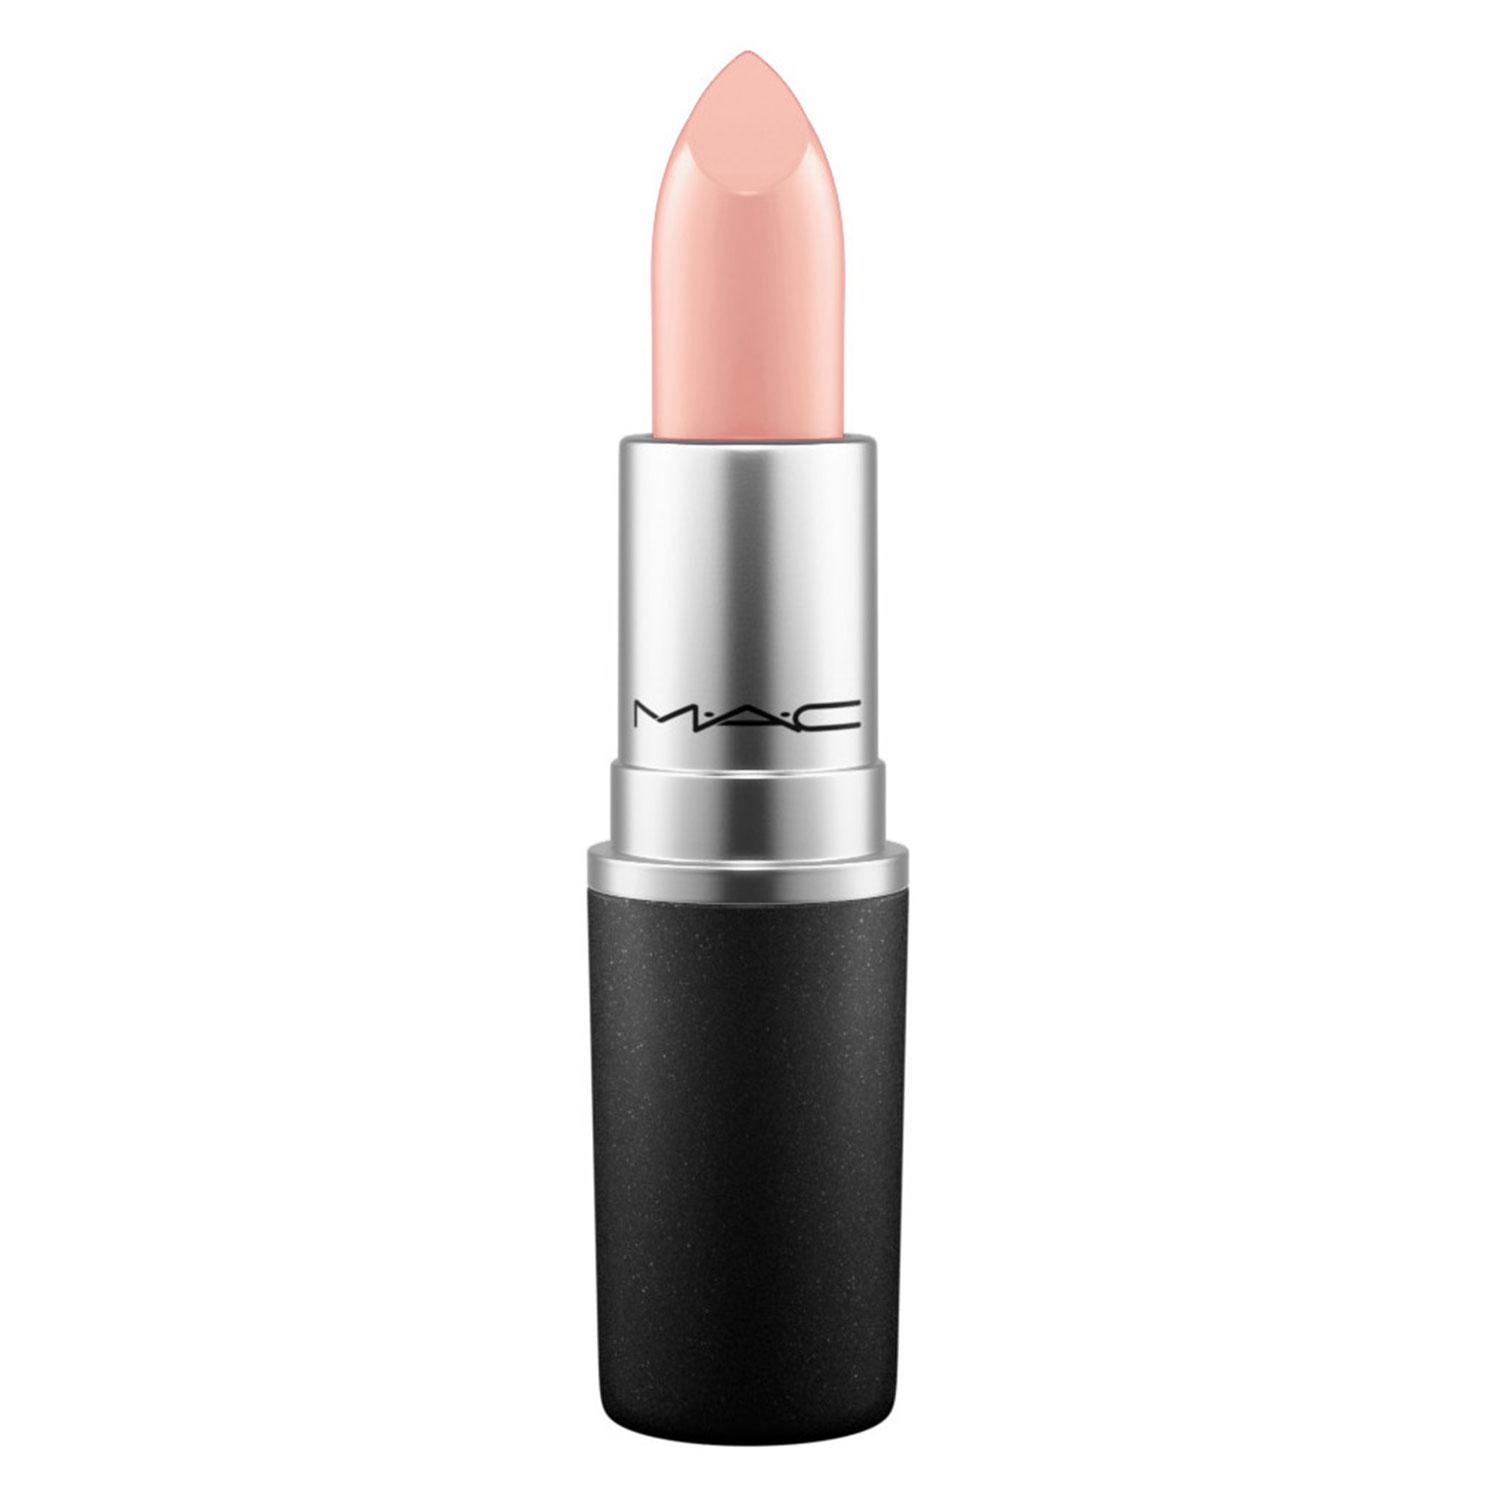 Cremesheen Lipstick - Crème d'Nude